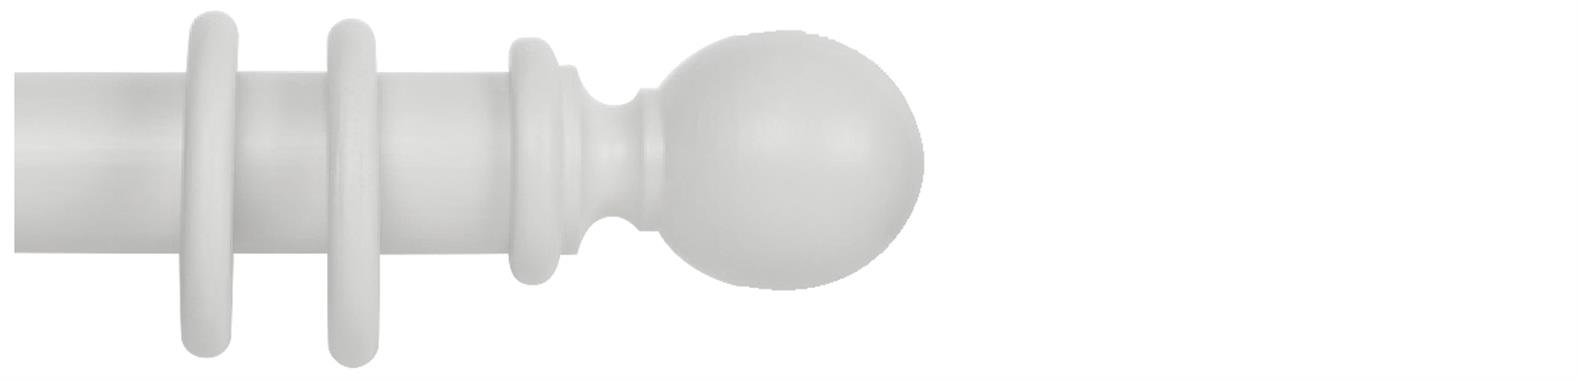 Cameron Fuller 63mm Pole White Ball